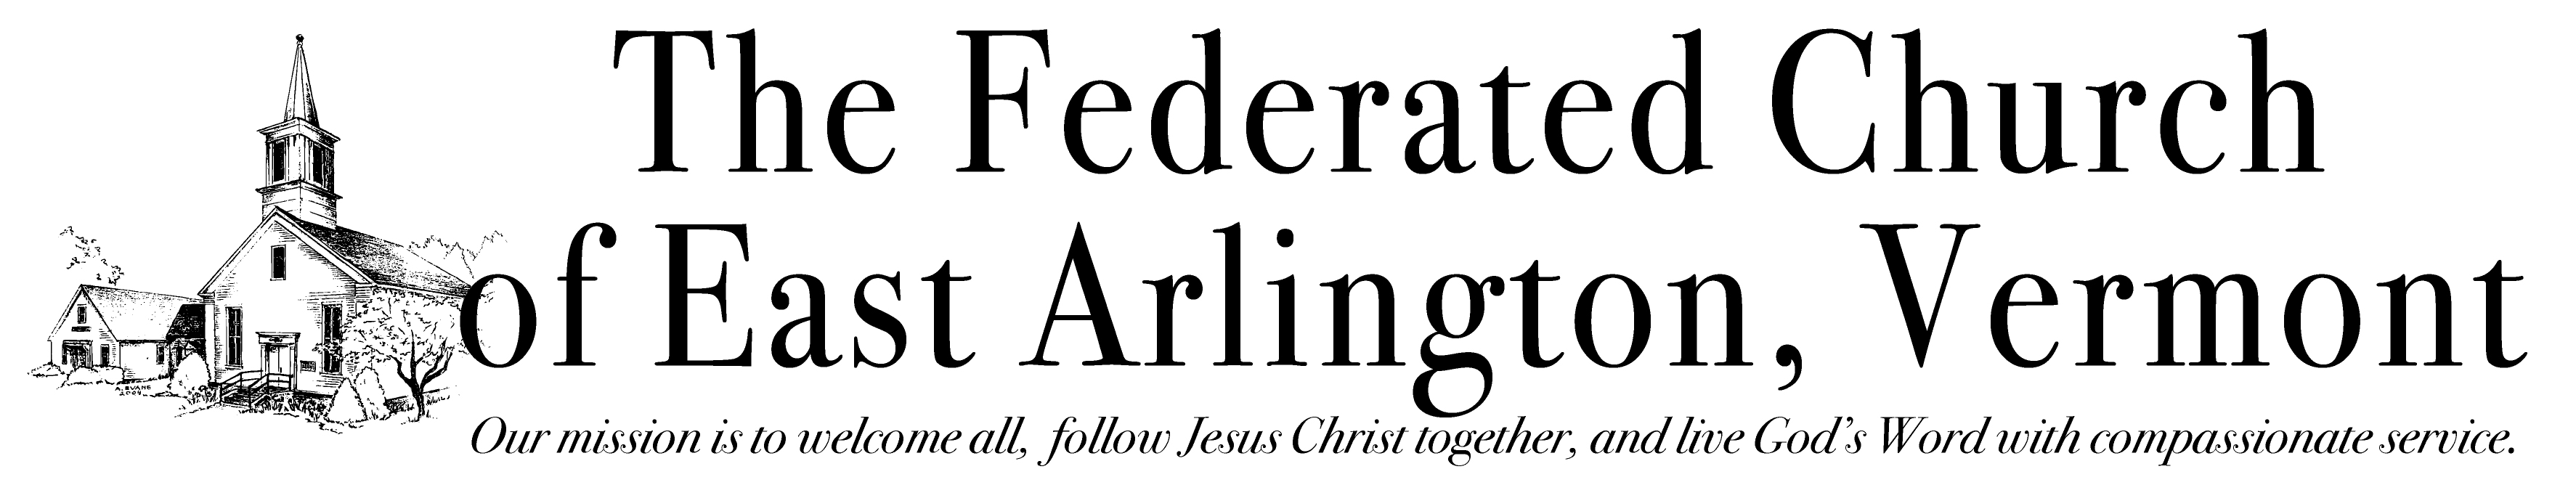 The Federated Church of East Arlington